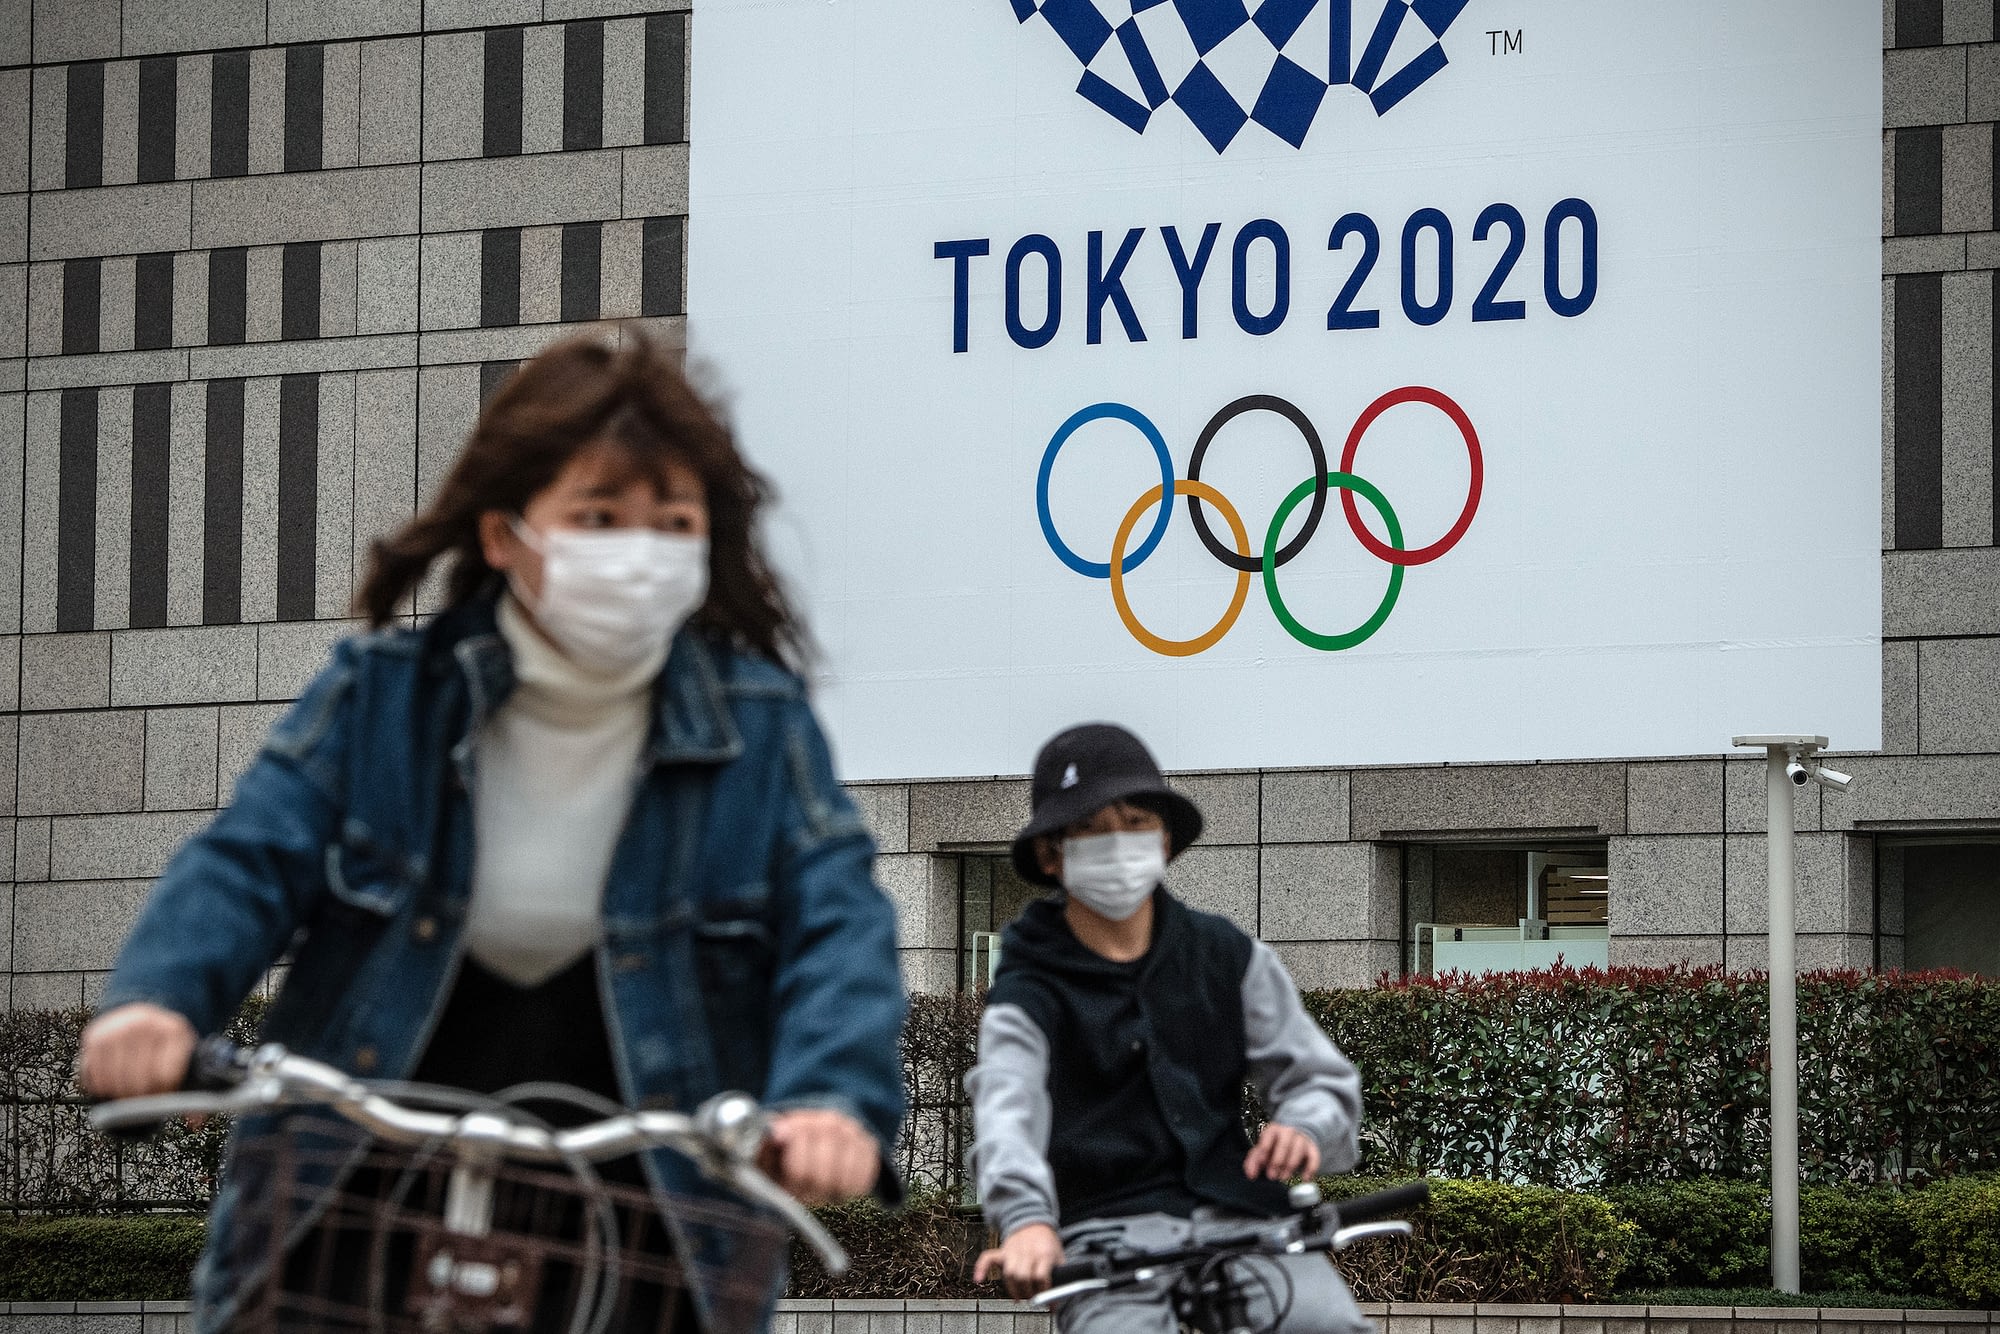 Tokyo Olympics resheduled to 2021